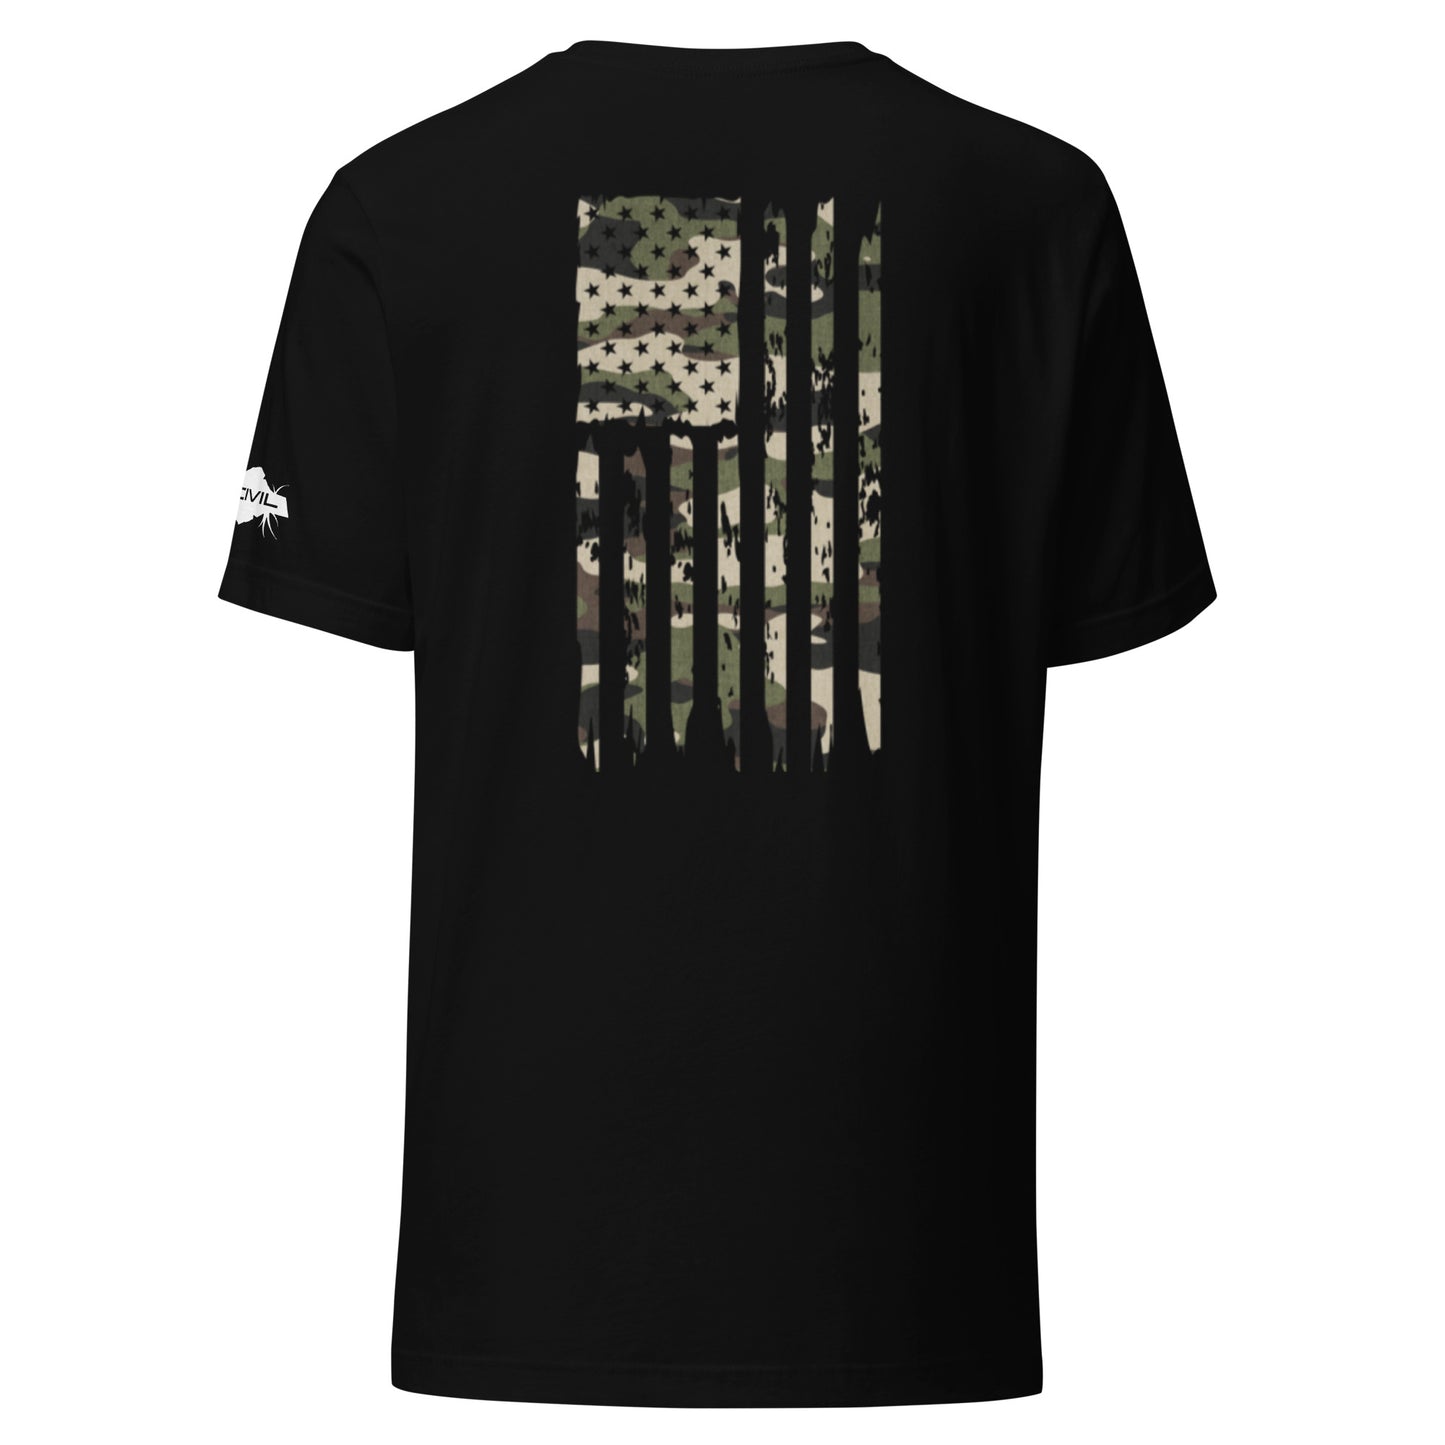 Unisex Black Camo distressed American Flag t-shirt back view